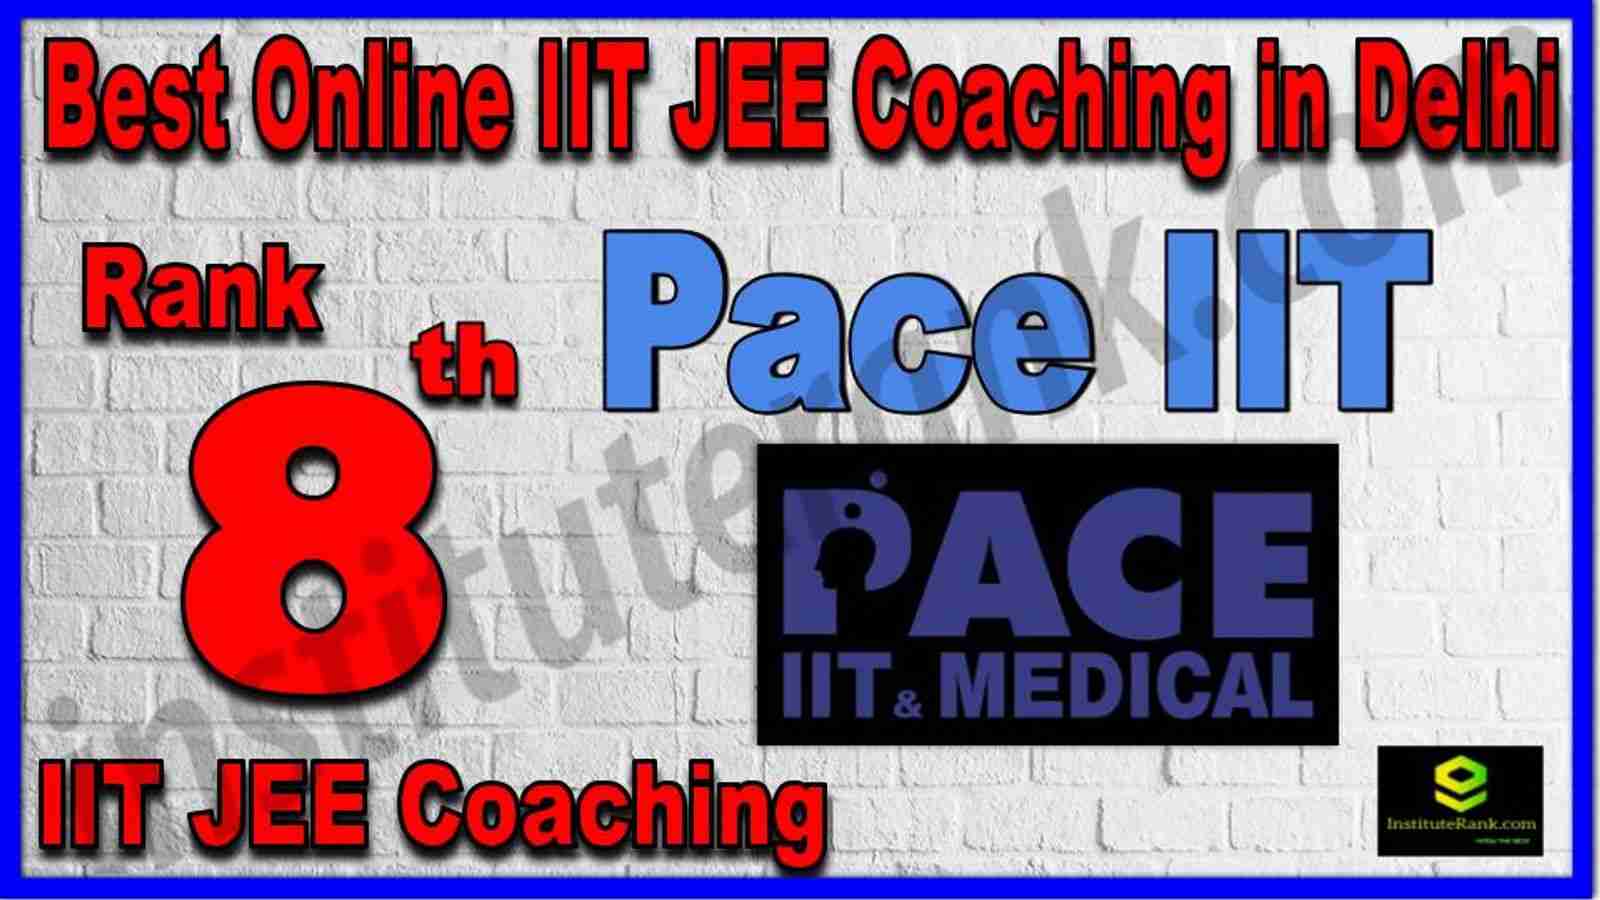 Rank 8th Best Online IIT JEE Coaching in Delhi